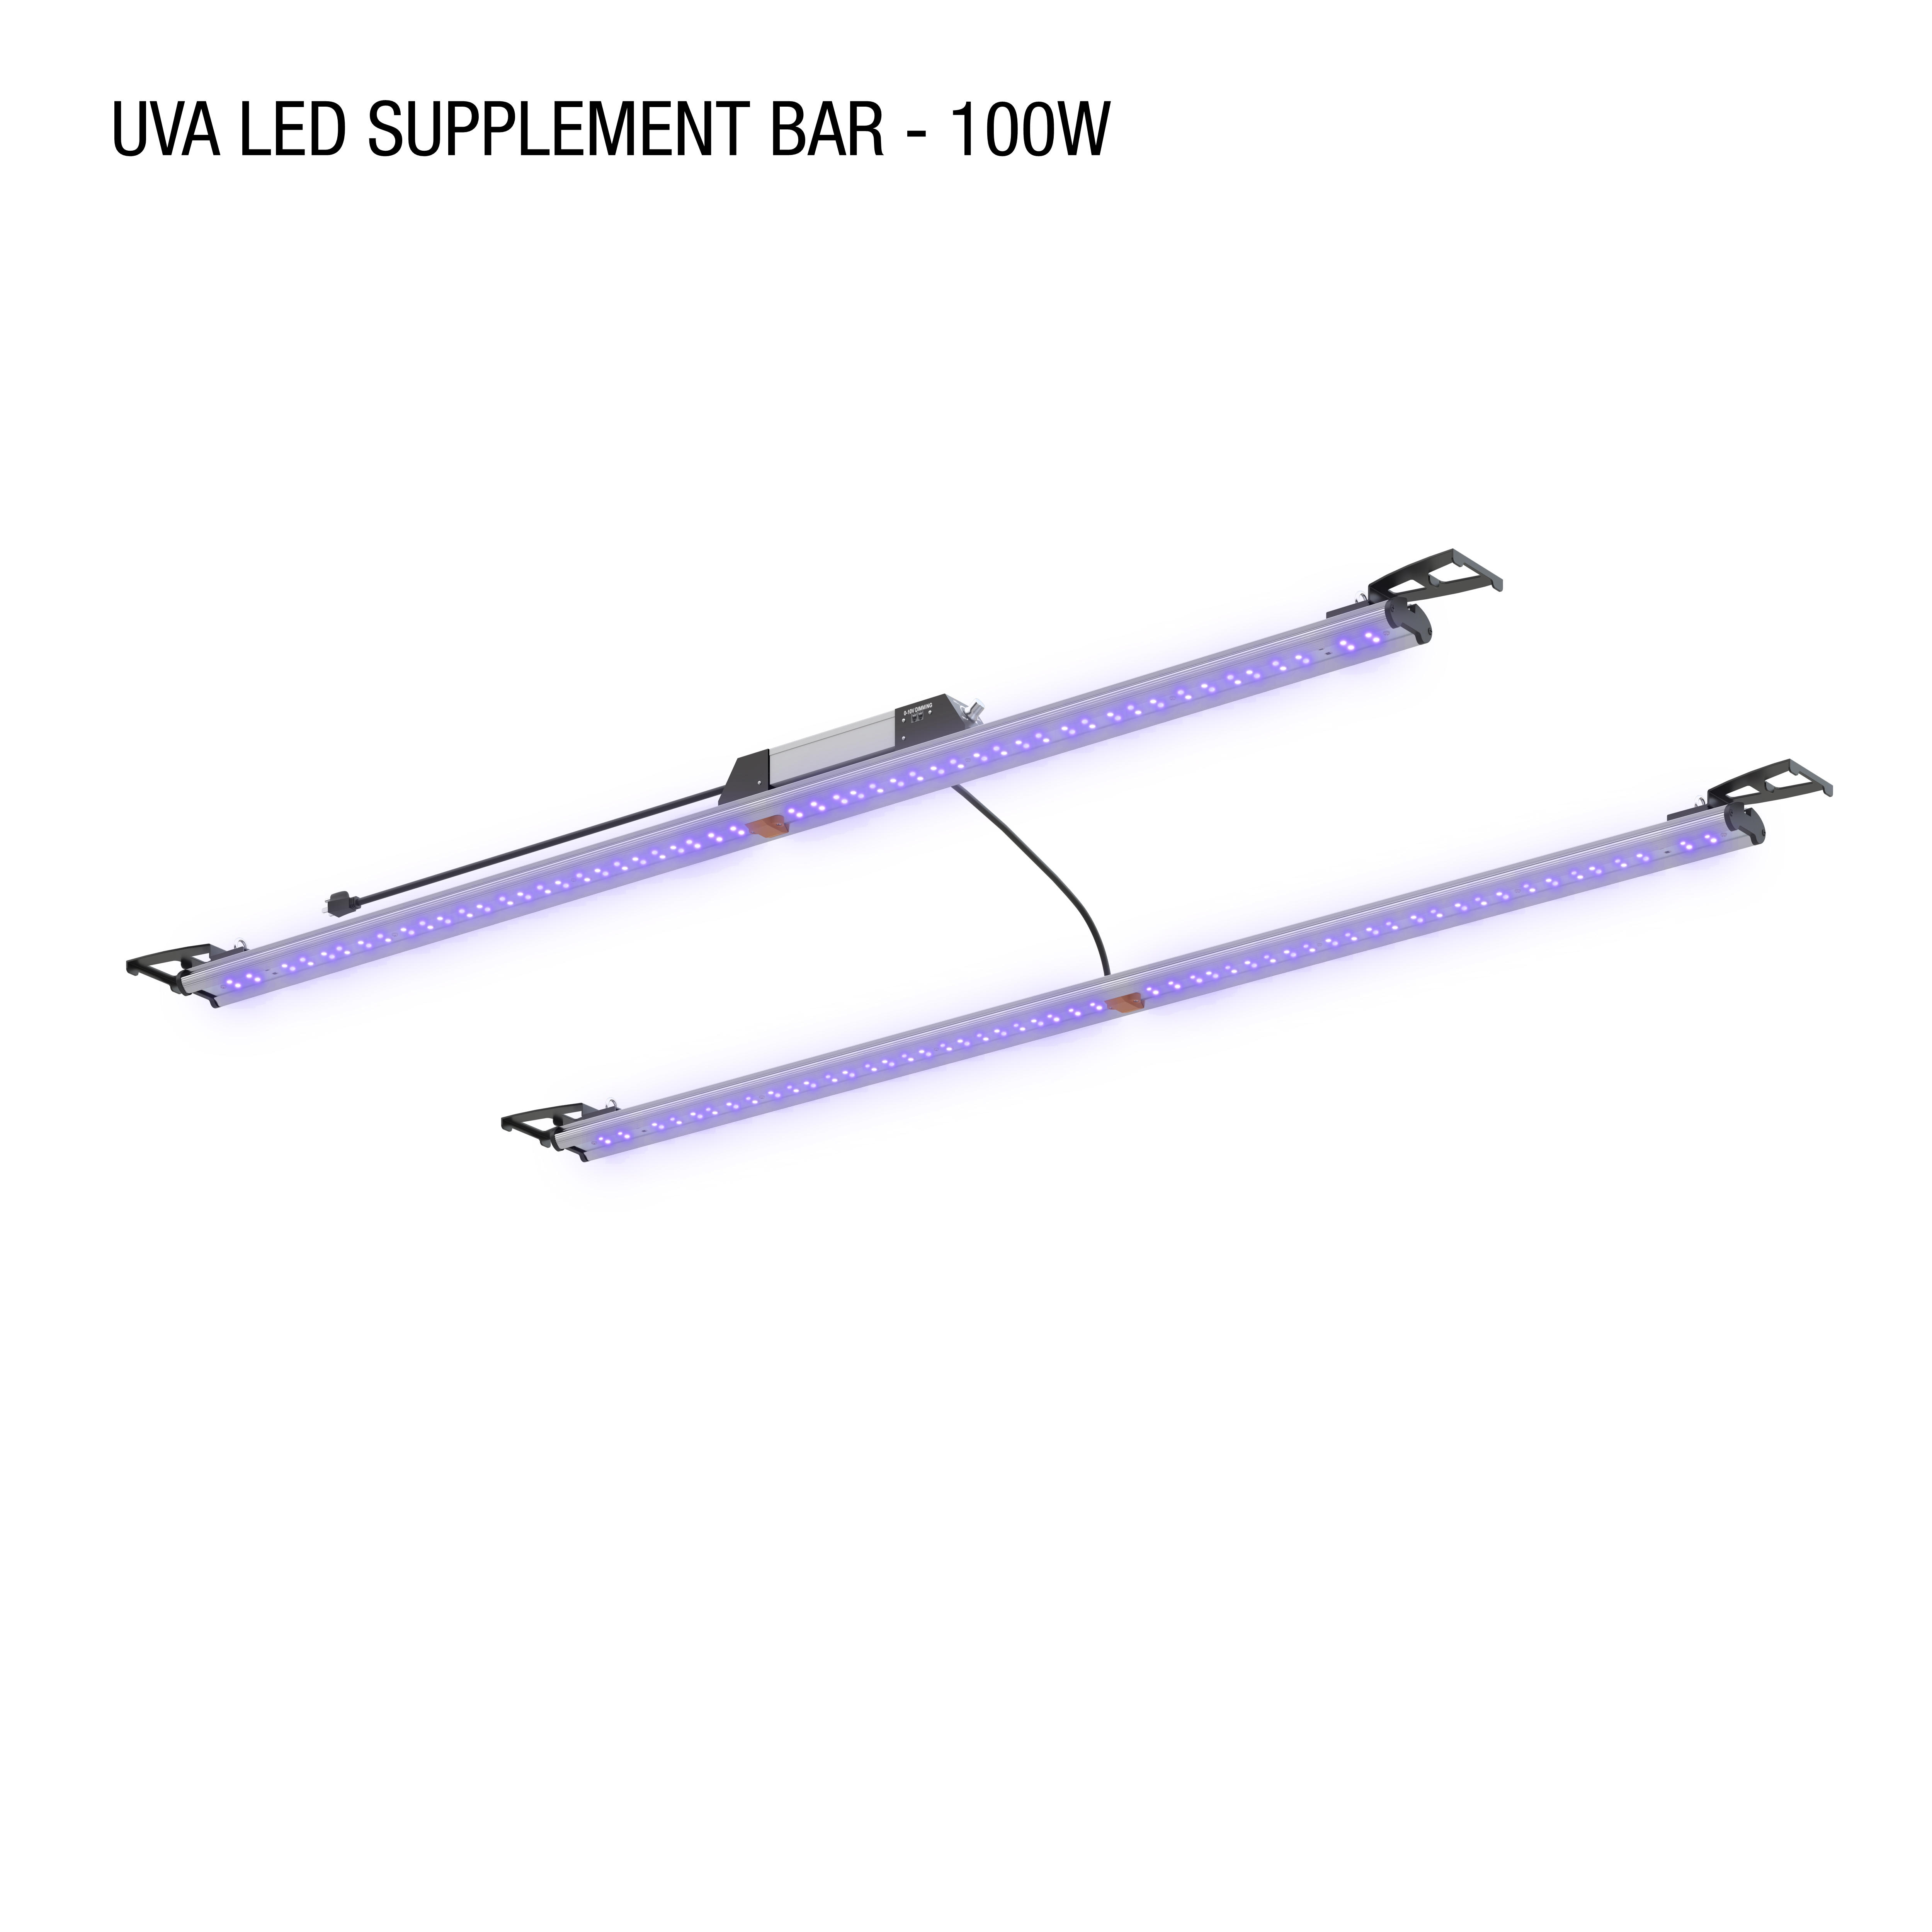 UVA Supplemental Spectrum Light Bars - 100W